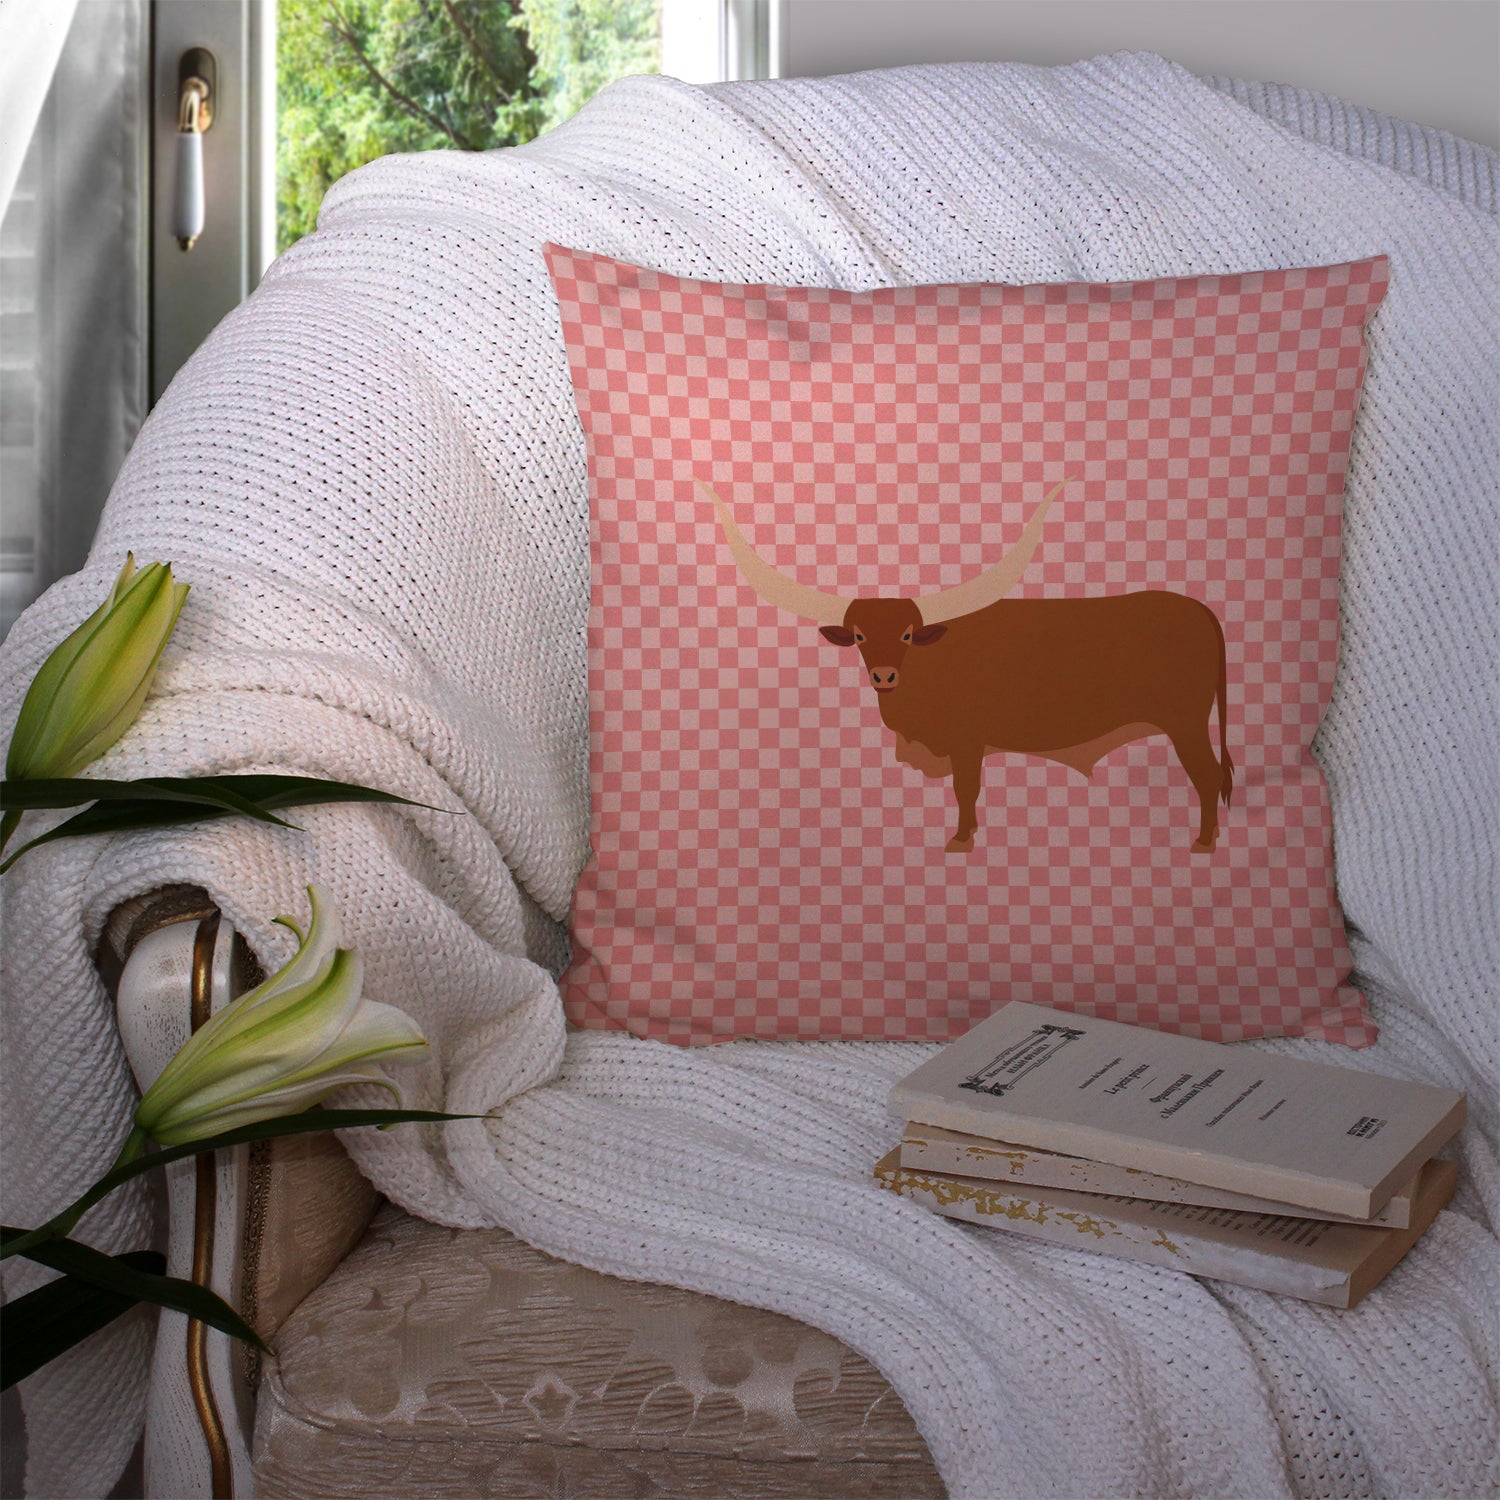 Ankole-Watusu Cow Pink Check Fabric Decorative Pillow BB7823PW1414 - the-store.com